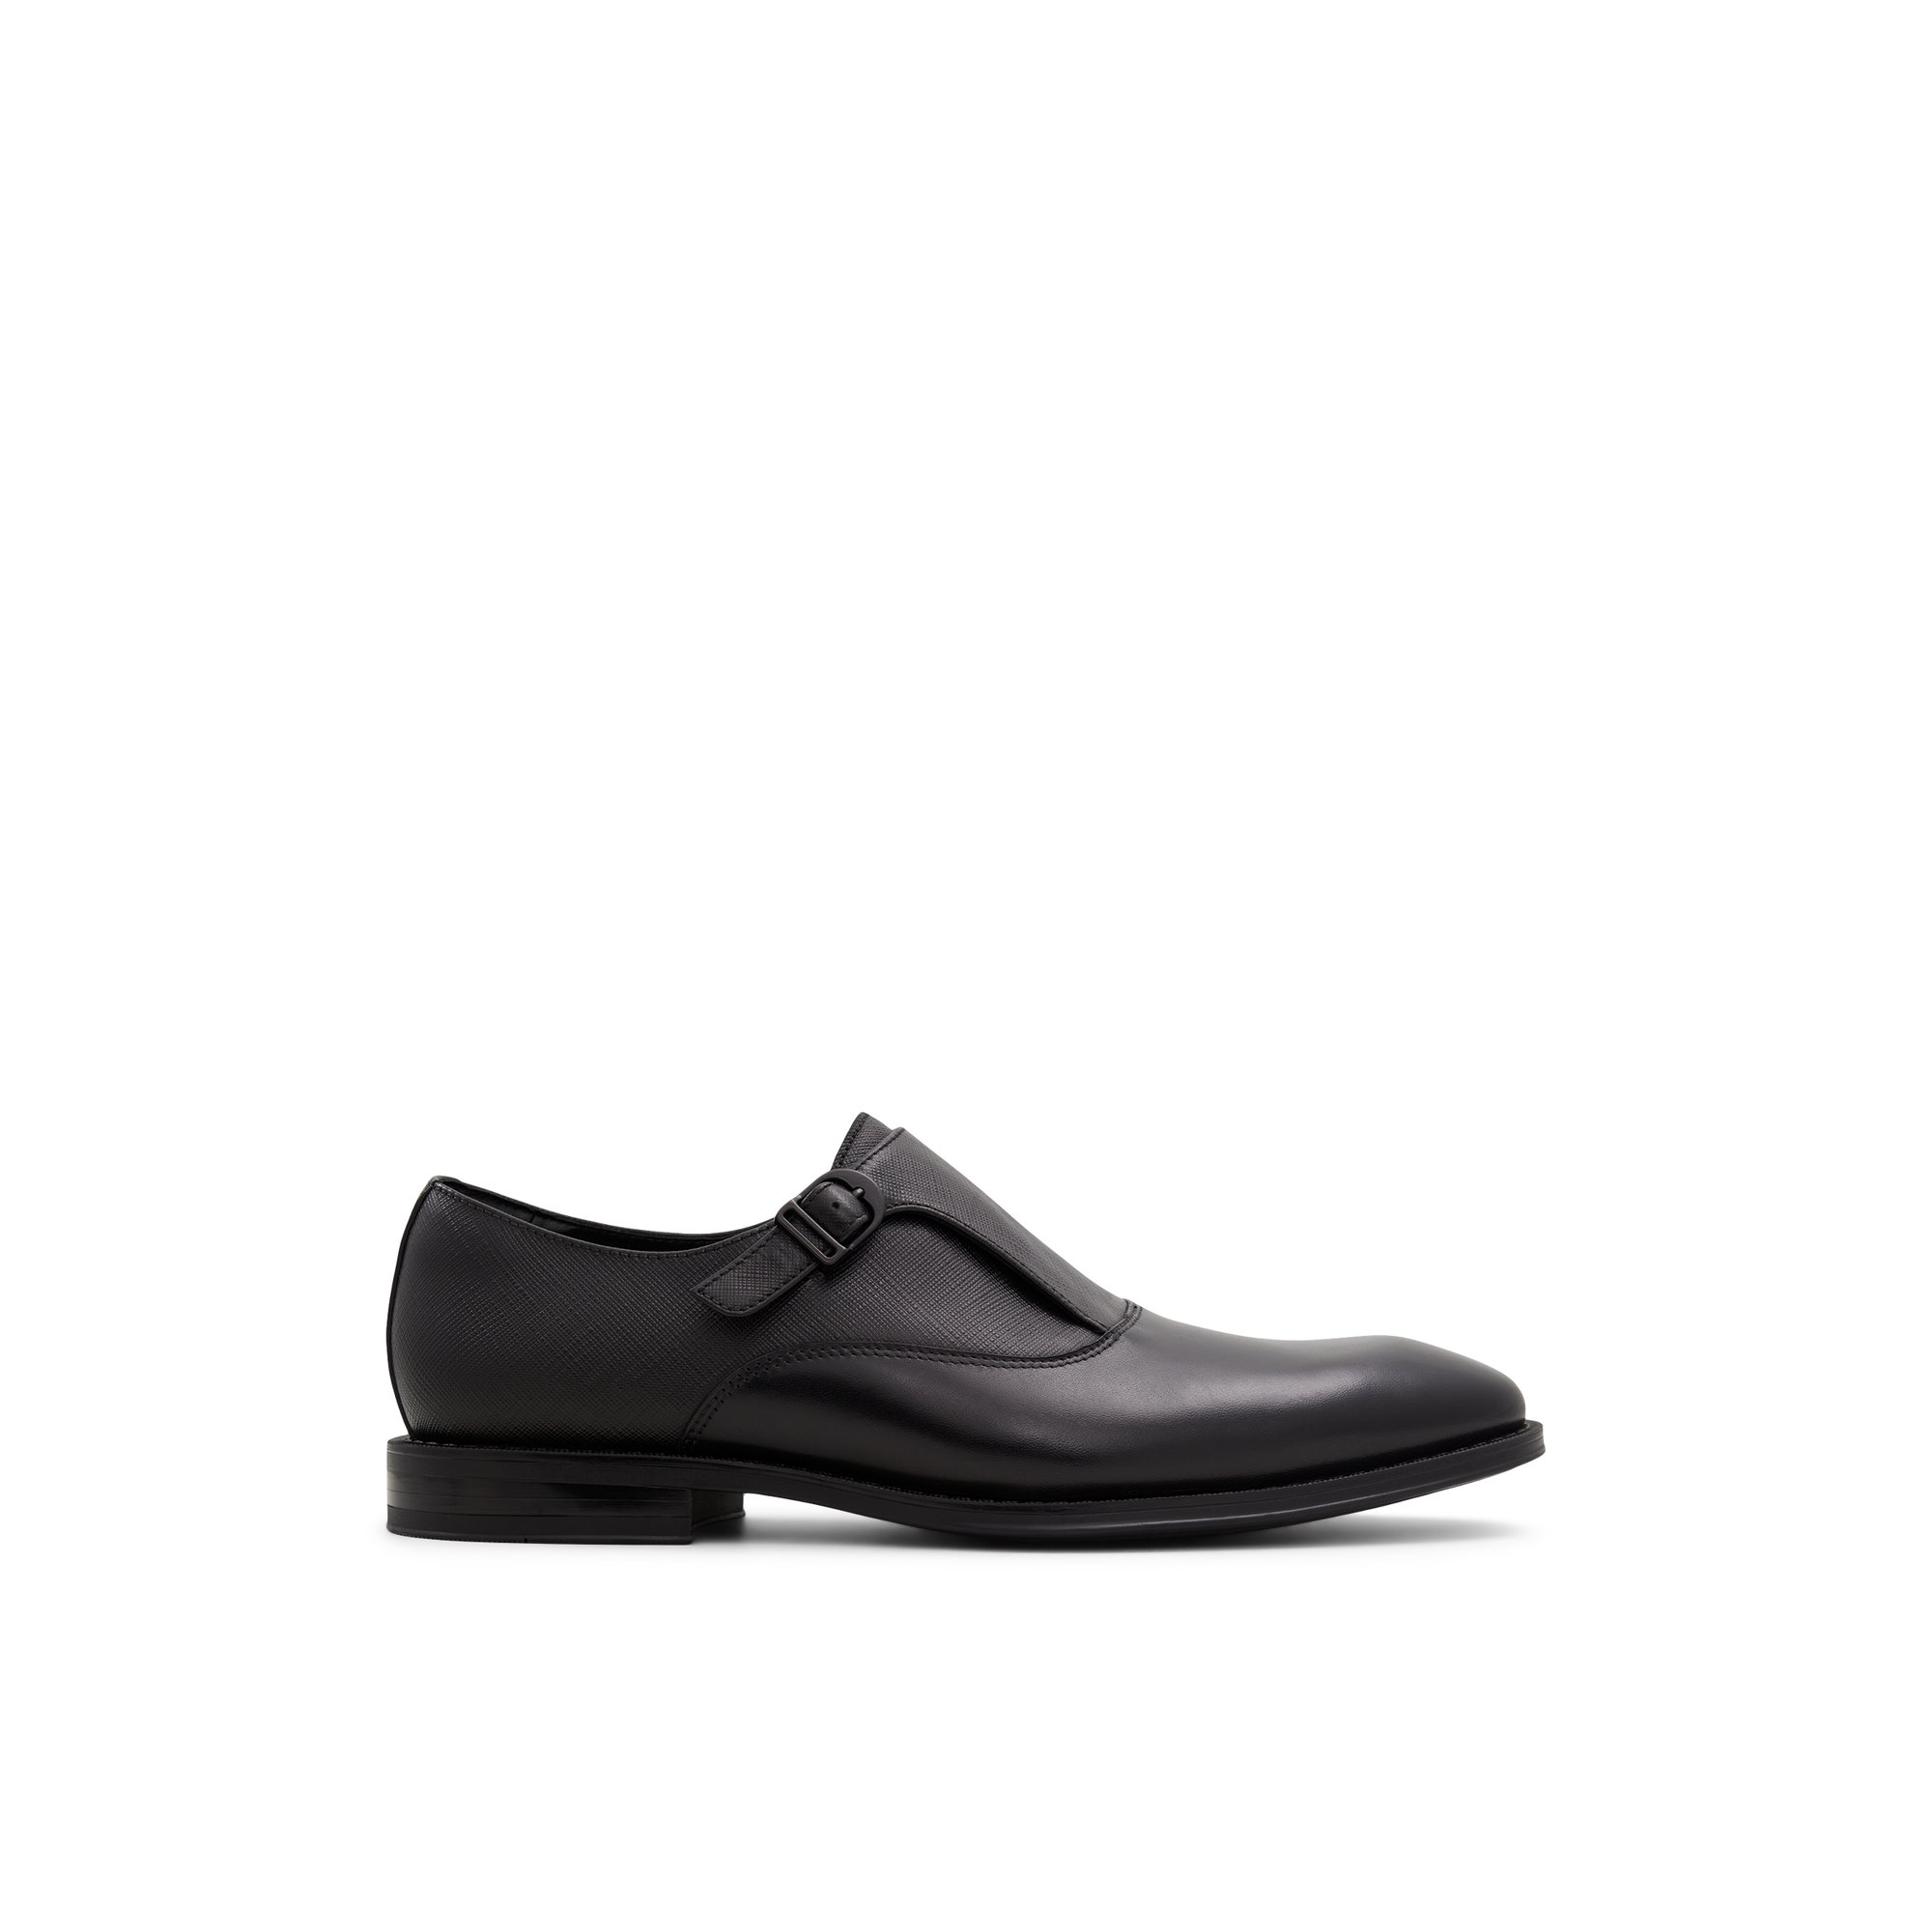 ALDO Ghent - Men's Dress Shoe - Black